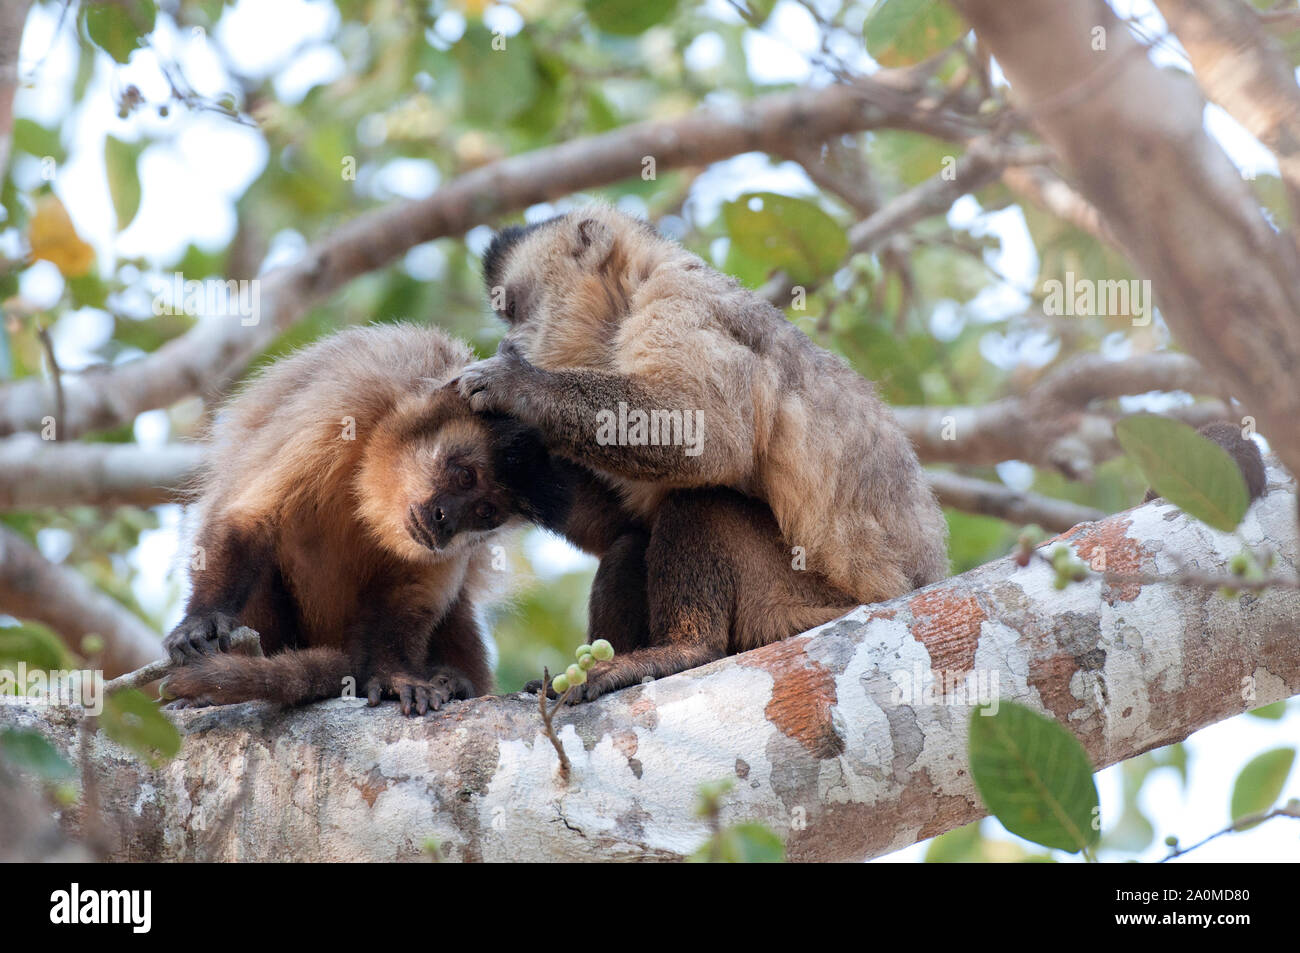 black-striped capuchin monkeys (Sapajus libidinosus), engaged in social grooming (allogrooming) in the Pantanal, Brazil Stock Photo